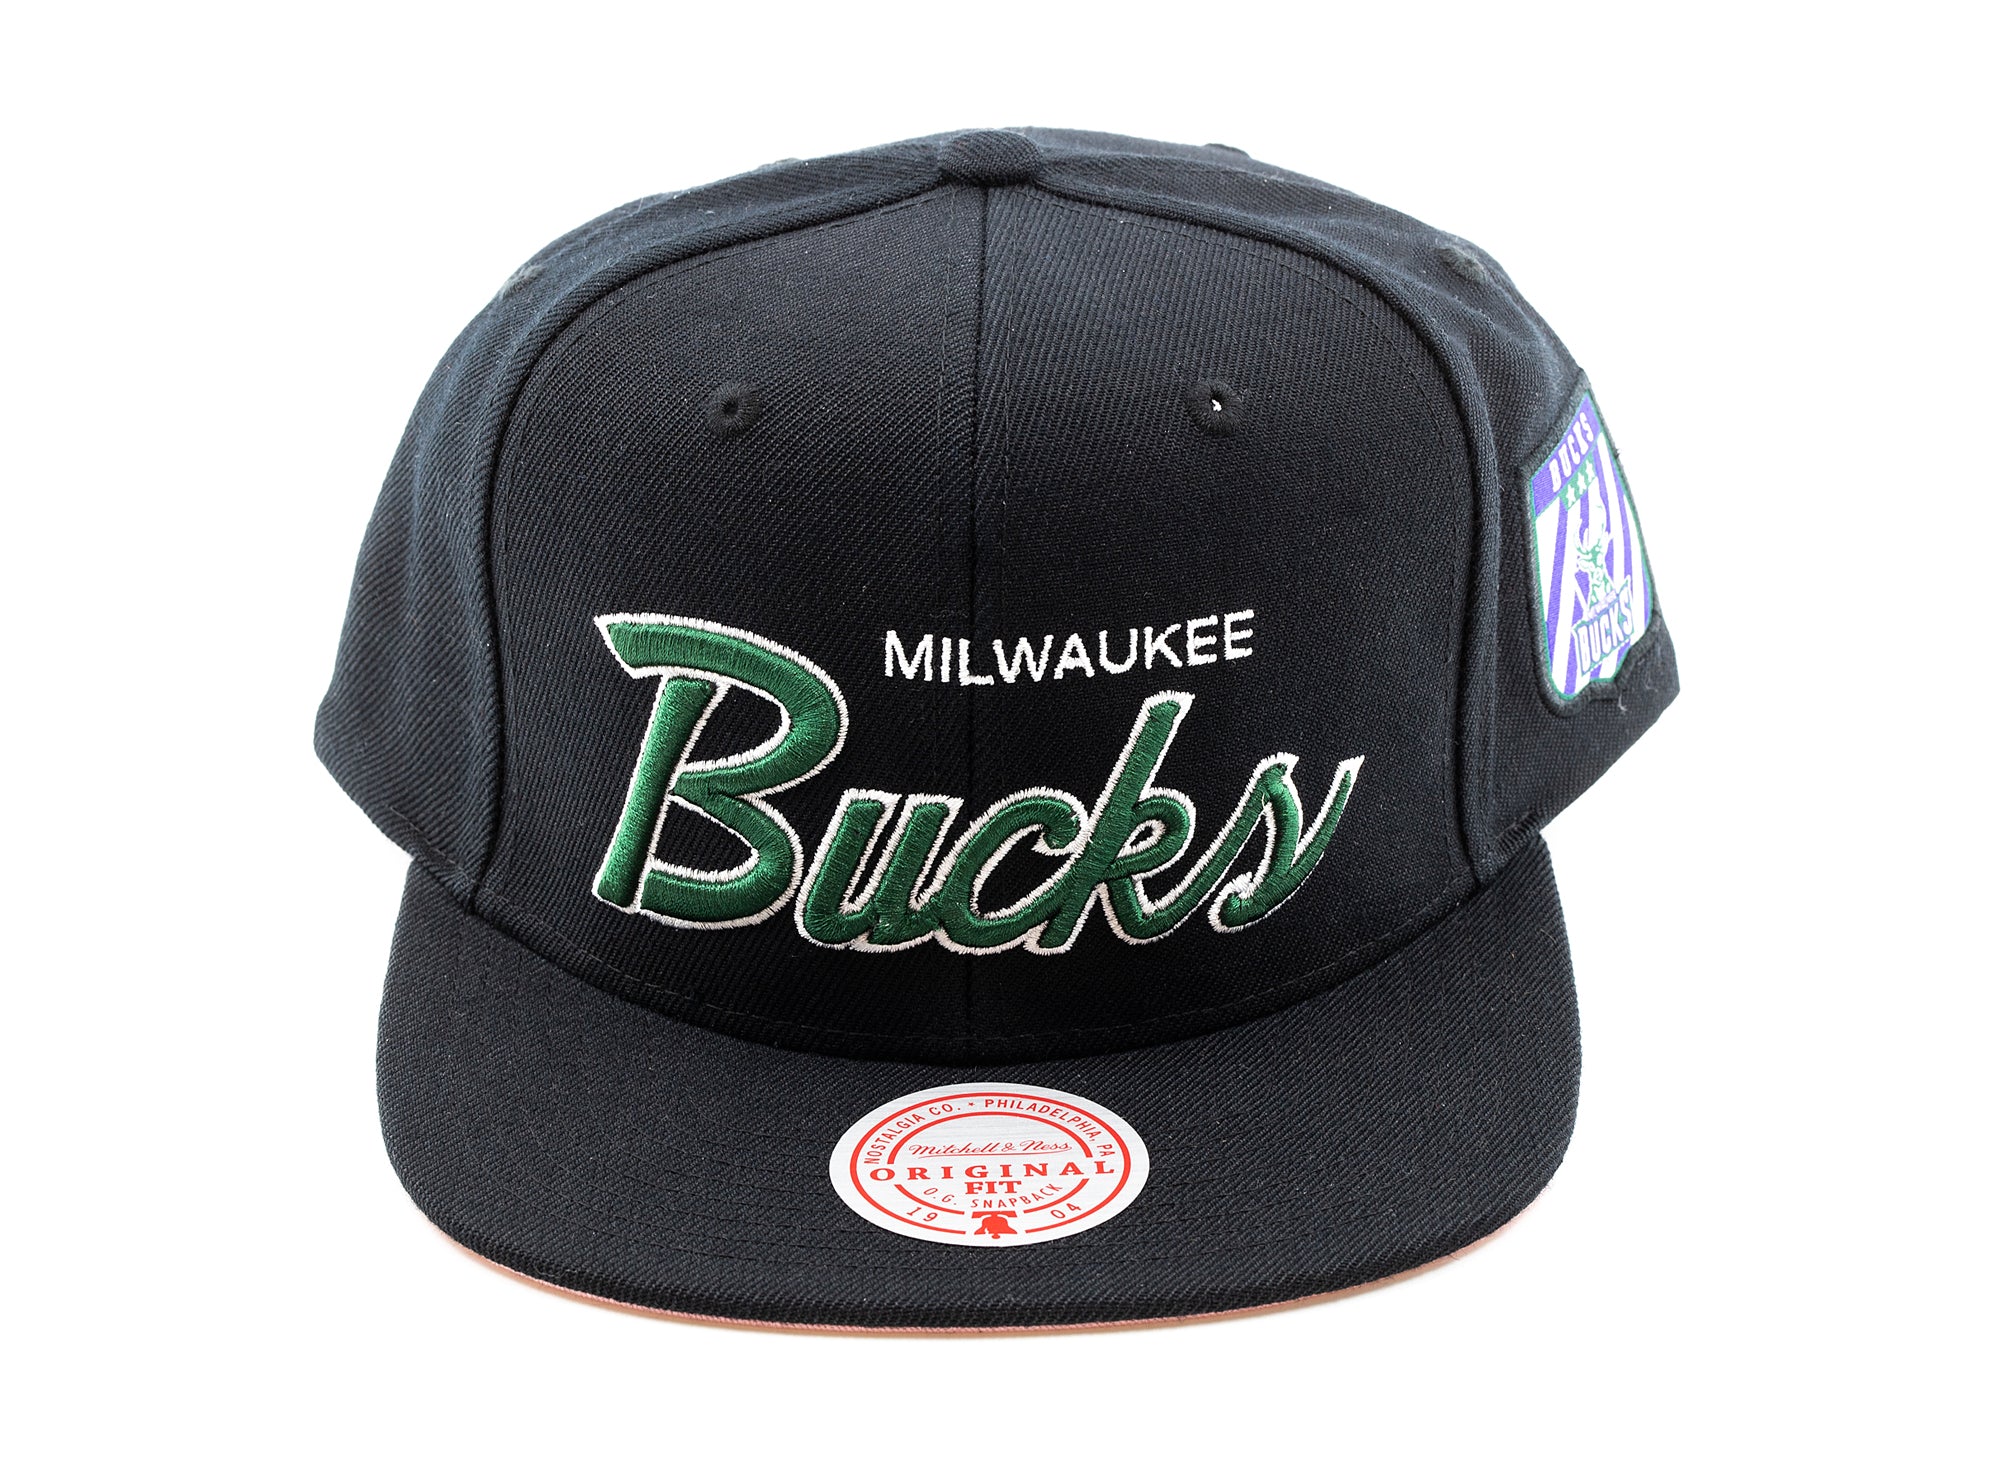 MITCHELL & NESS - Accessories - Milwaukee Bucks Basic Snapback